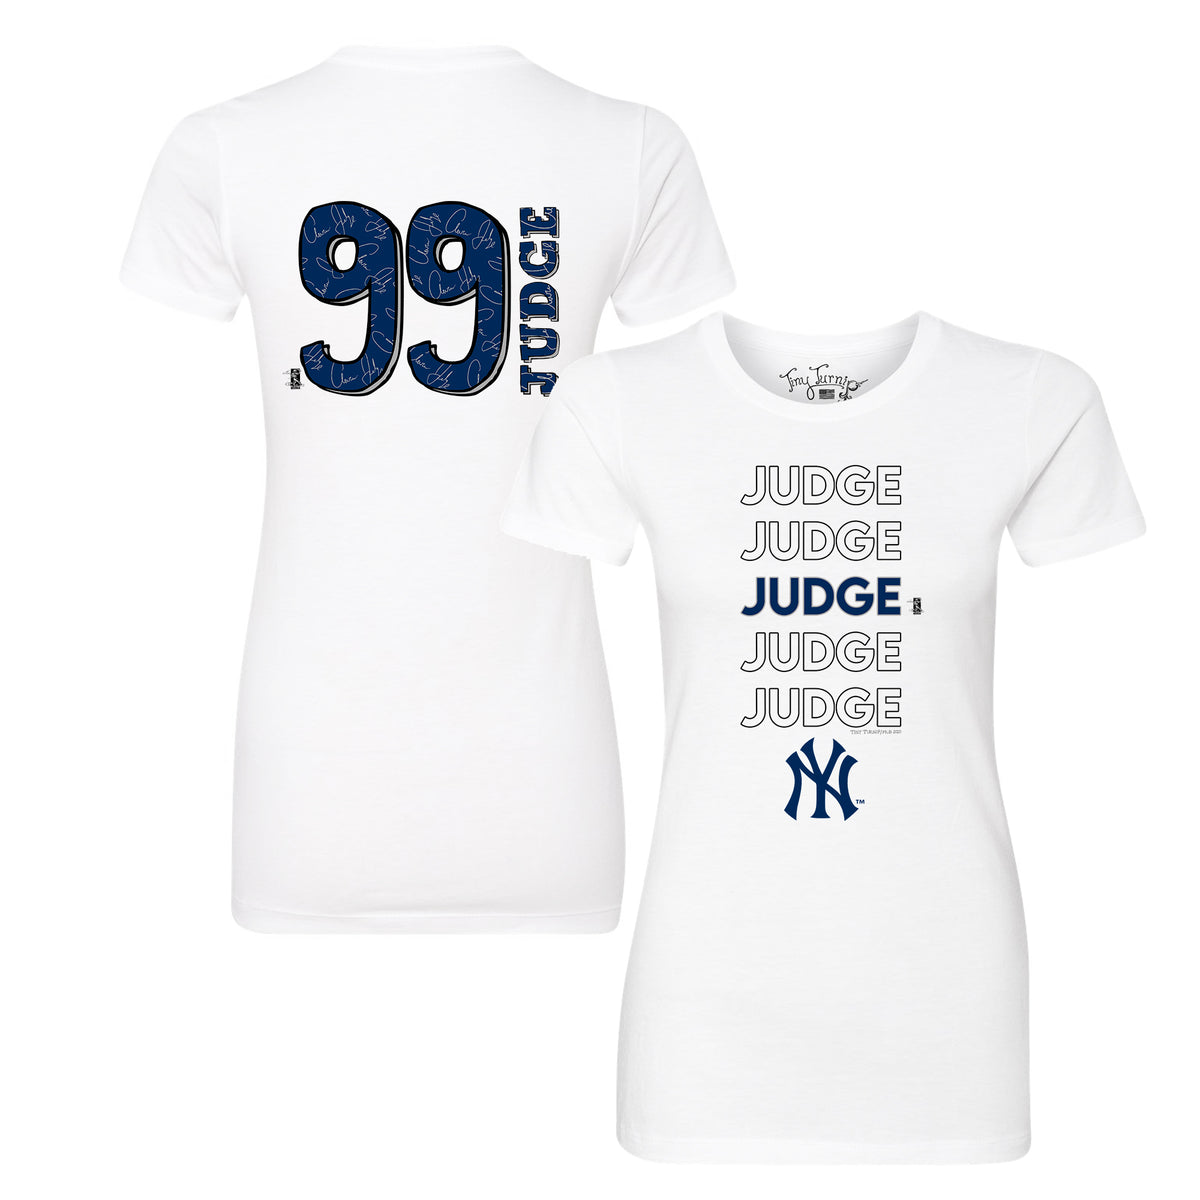 Lids New York Yankees Tiny Turnip Youth Stitched Baseball 3/4-Sleeve Raglan  T-Shirt - White/Navy